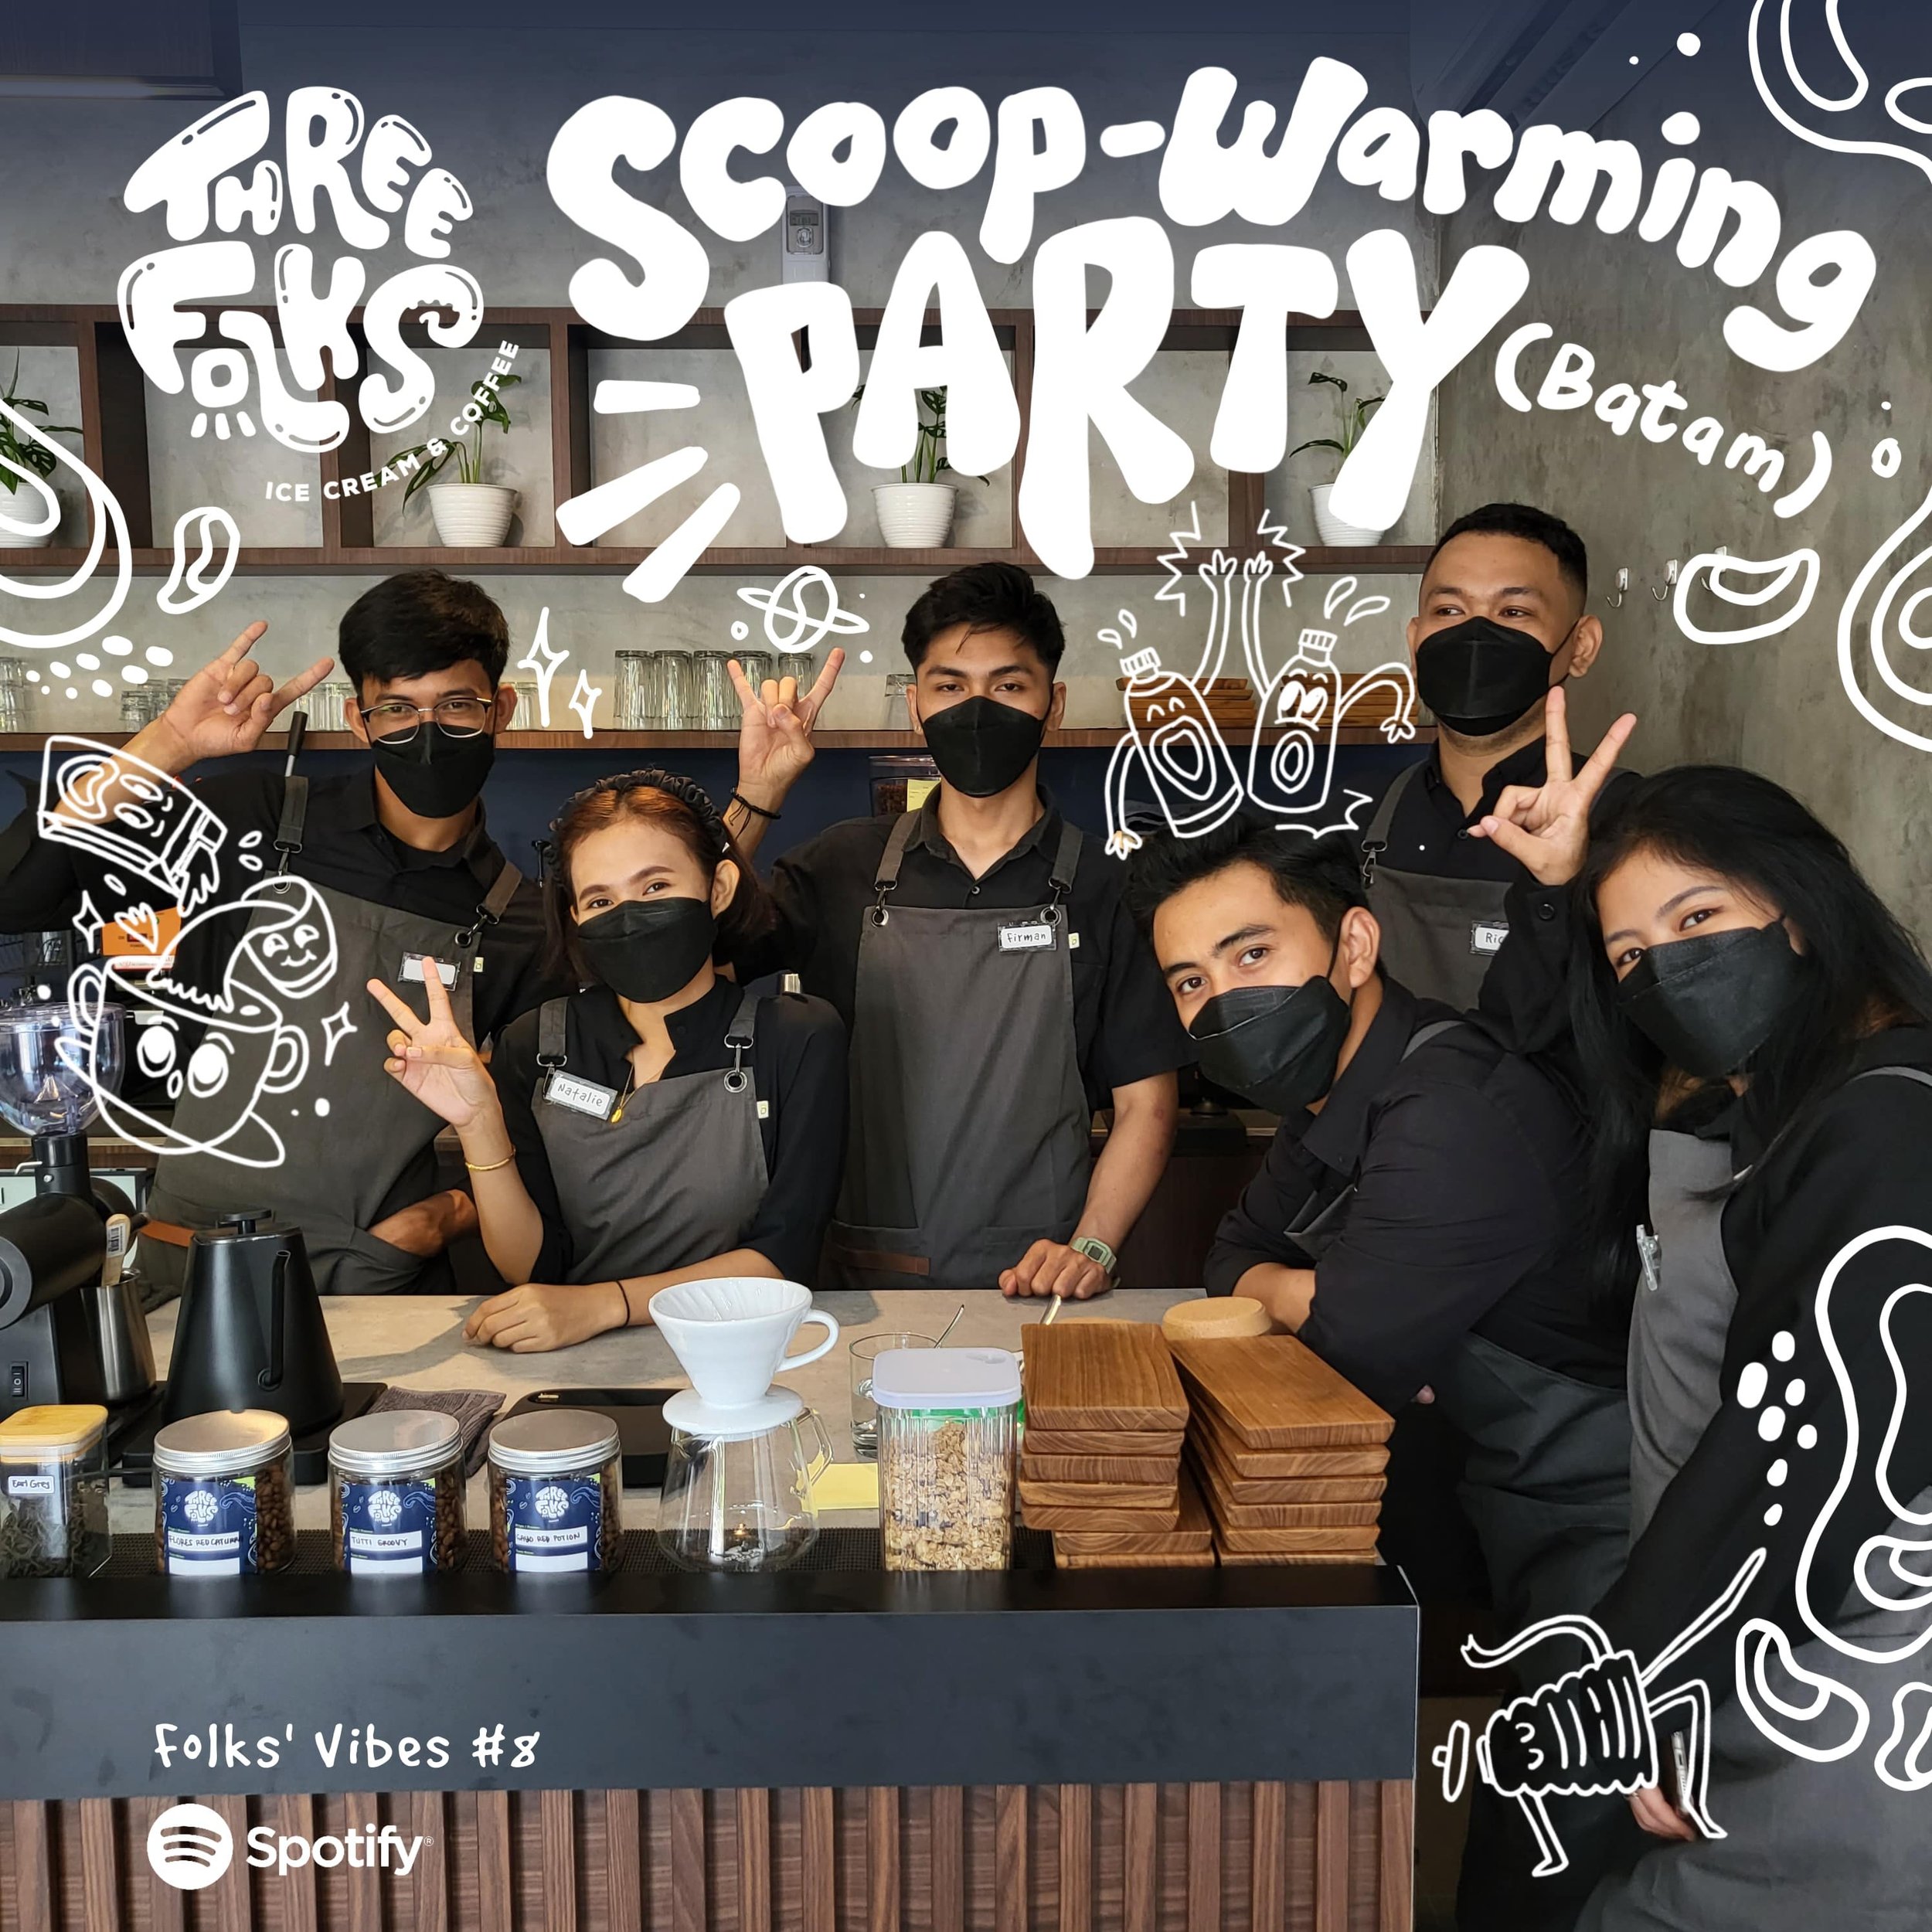 Scoop-warming Party (Batam)